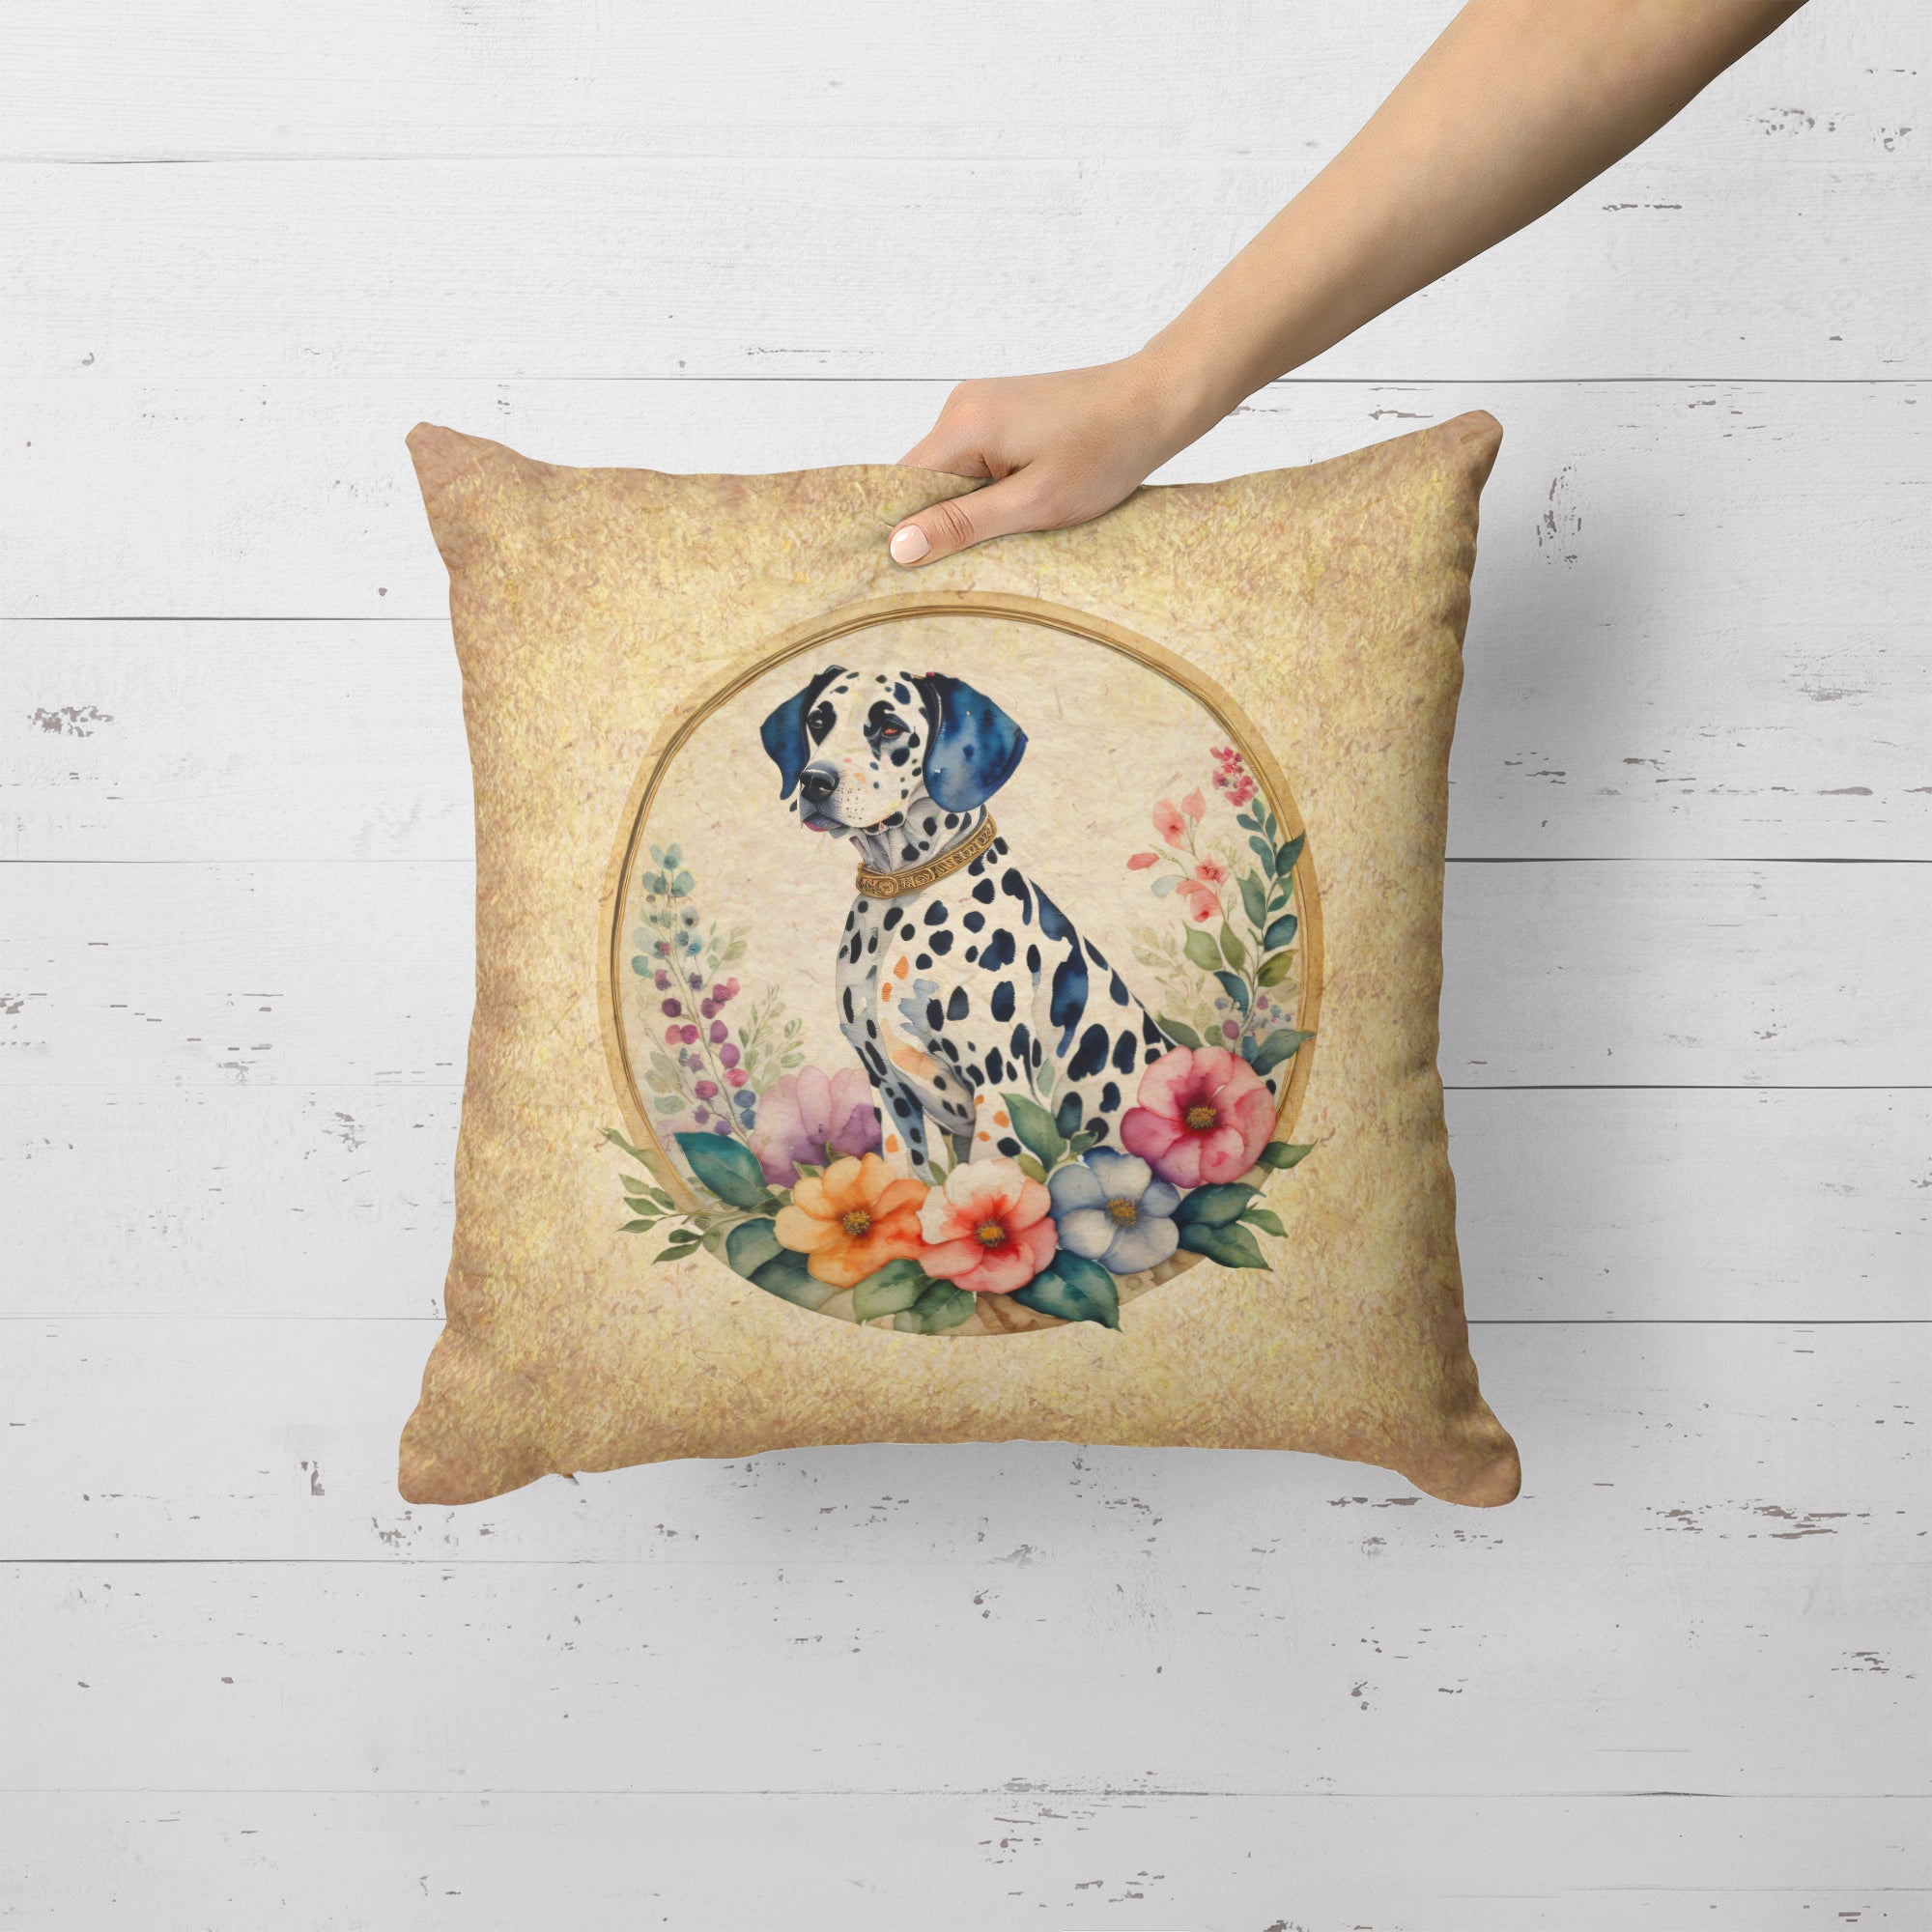 Dalmatian and Flowers Fabric Decorative Pillow